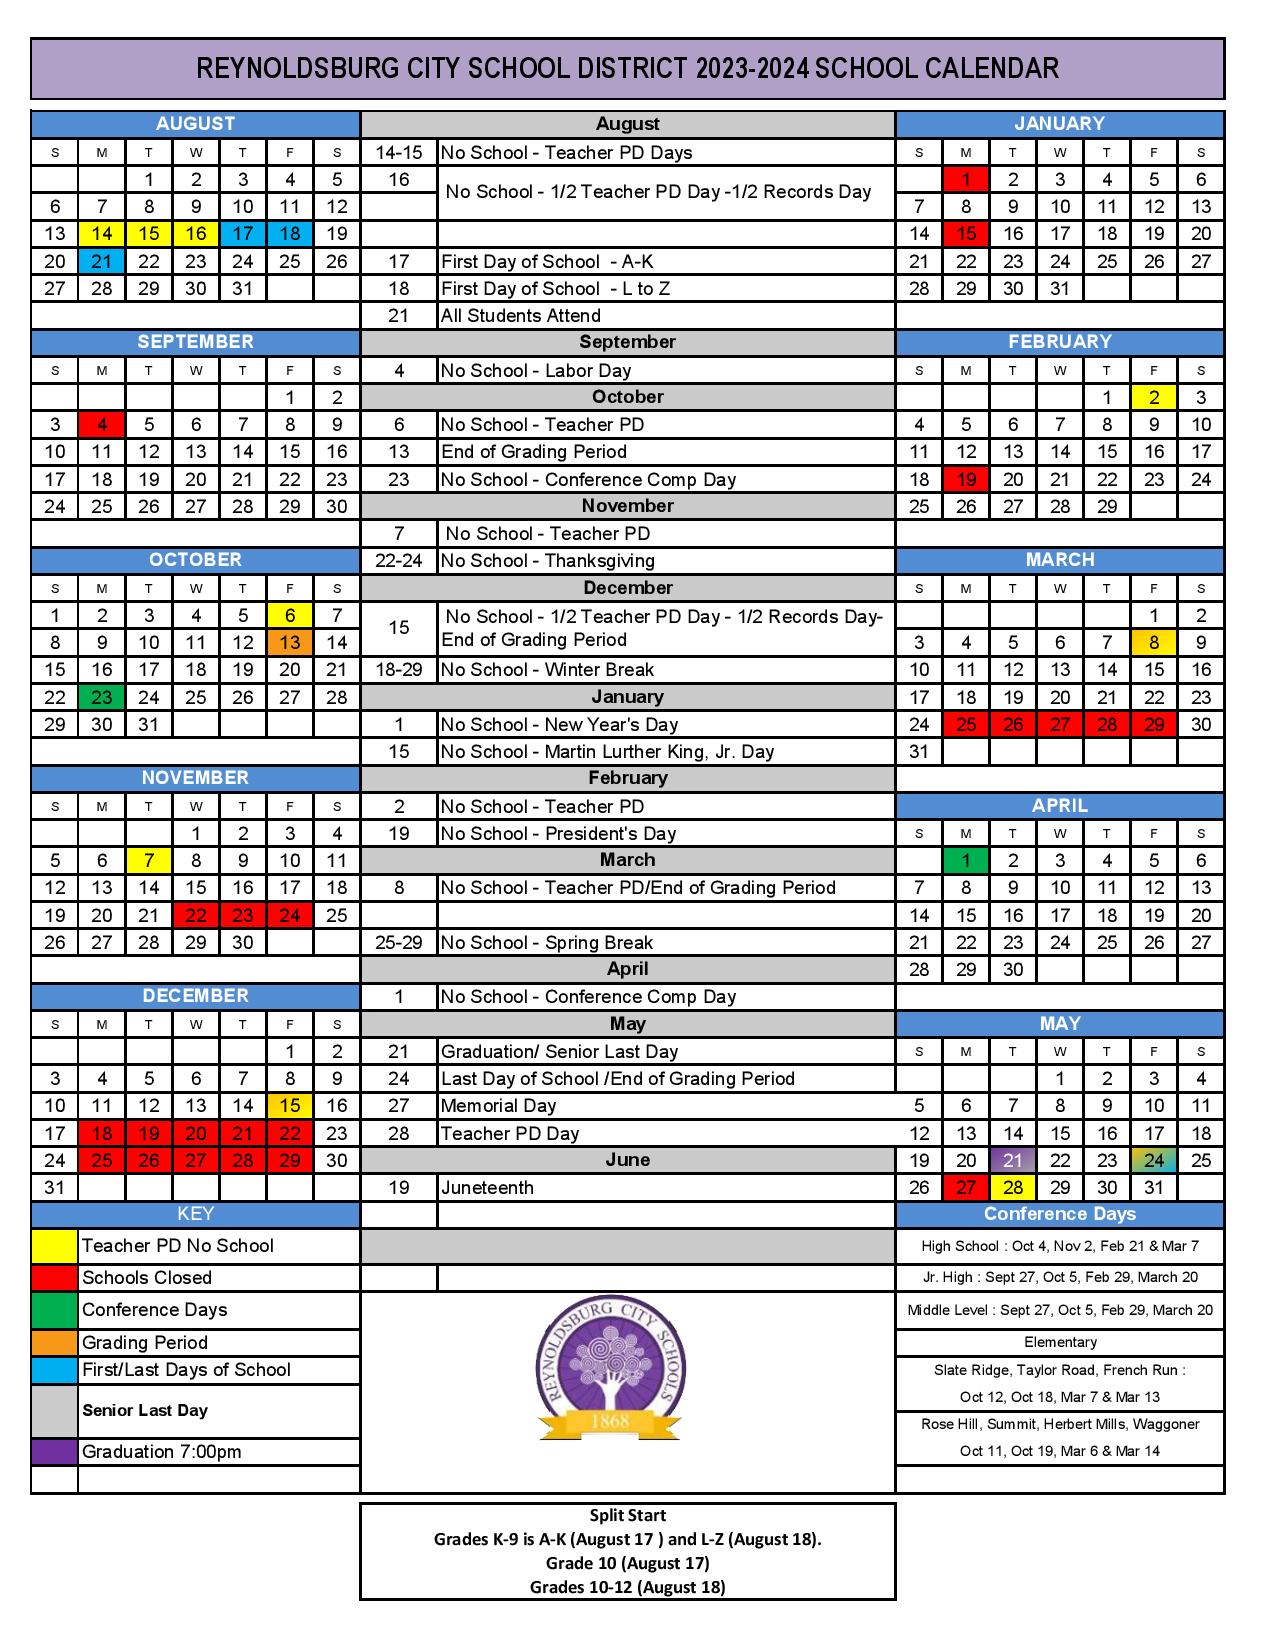 Reynoldsburg City Schools Calendar 2023 2024 In PDF School Calendar Info